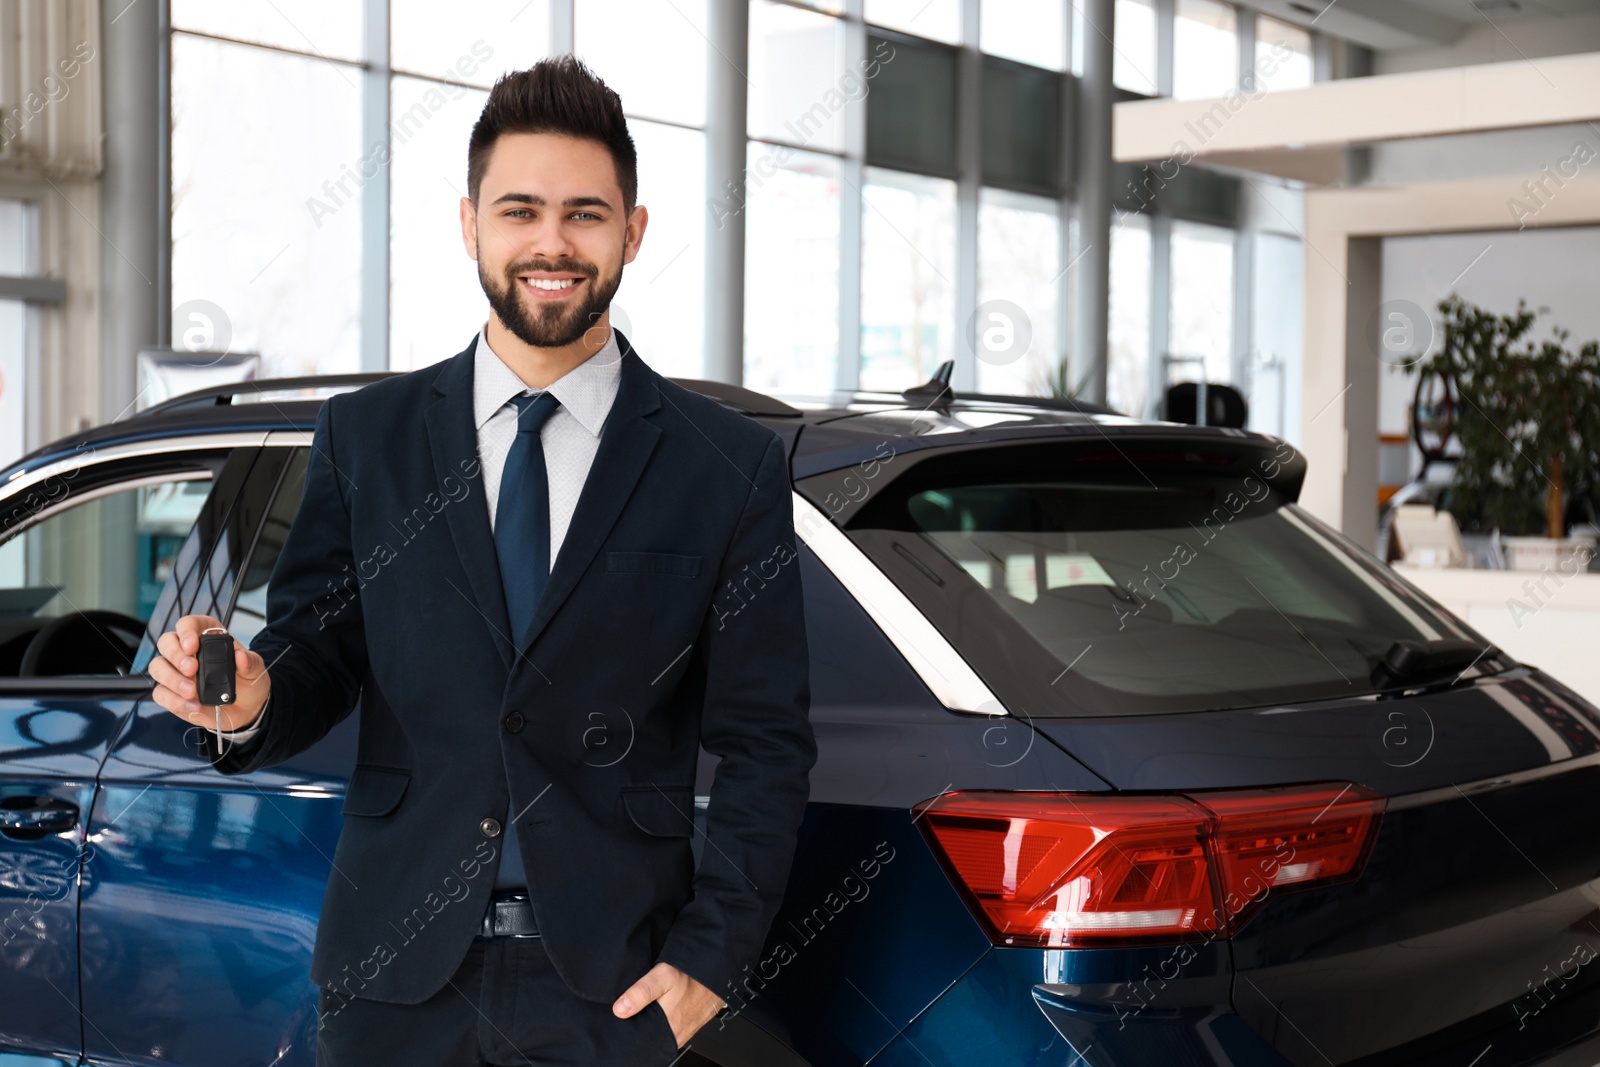 Photo of Salesman with key near car in dealership